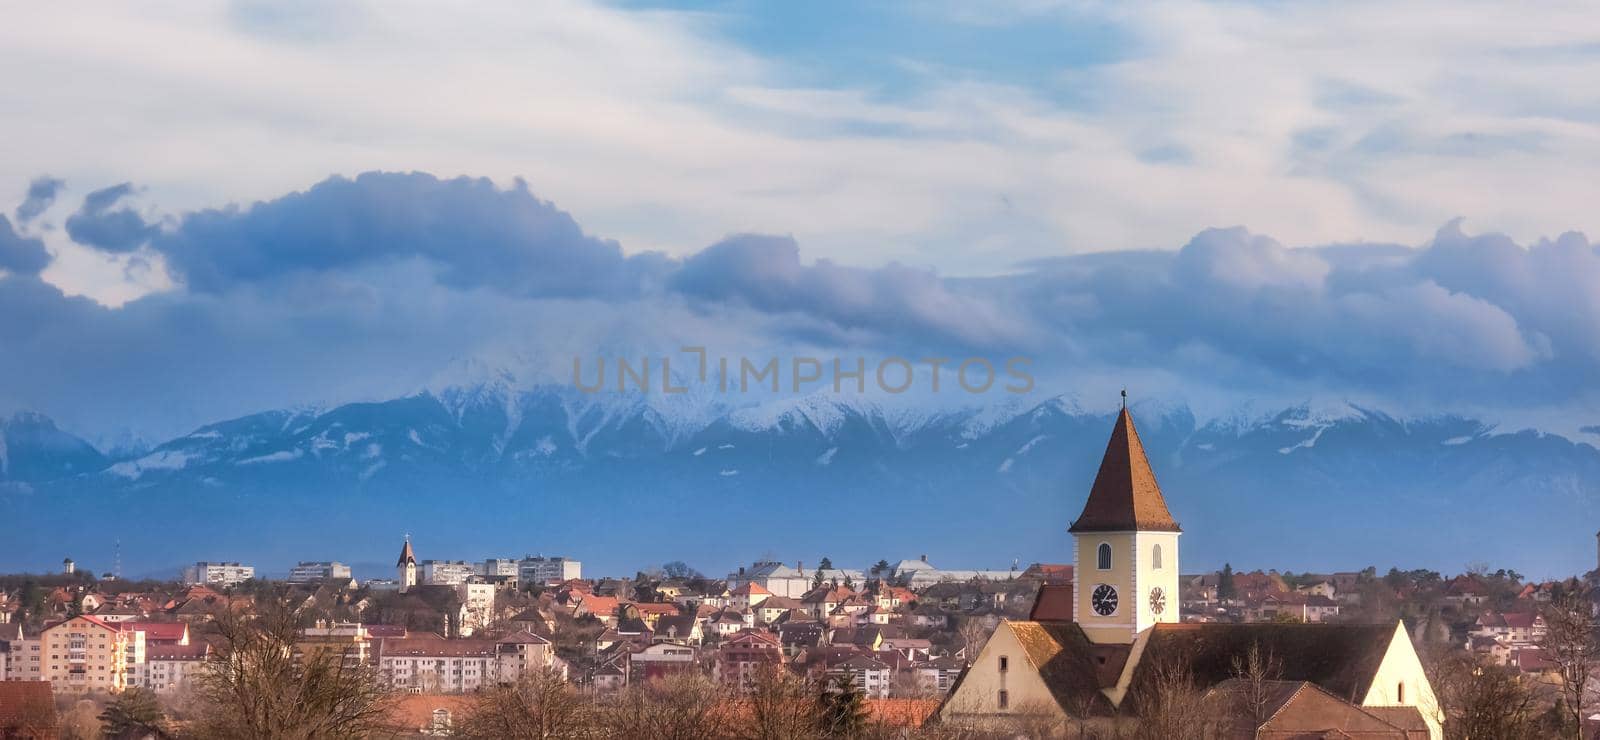 Sibiu city with the Fagaras Mountains in the back, Romania